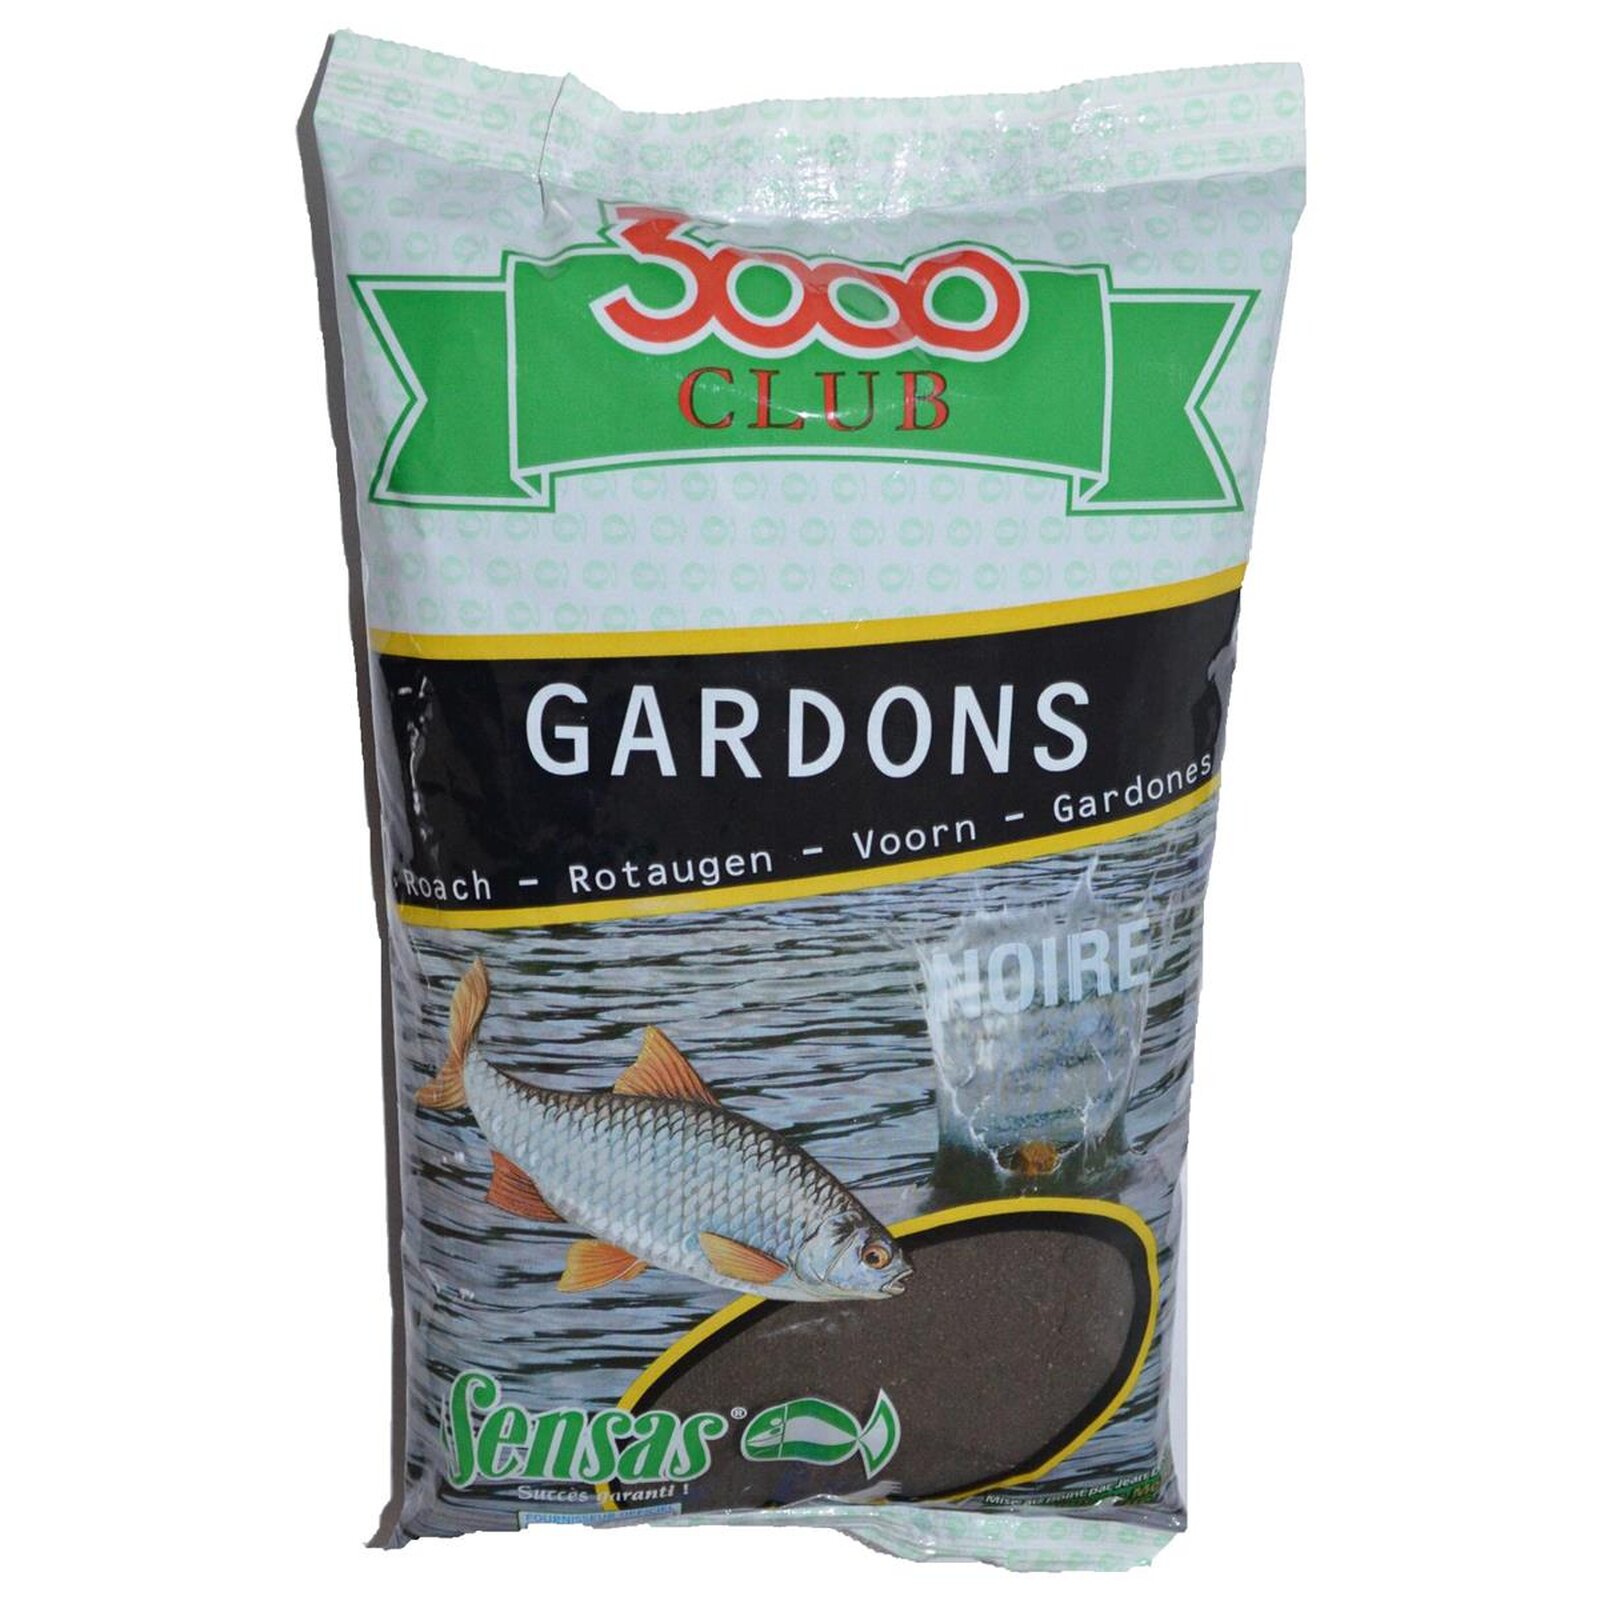 Sensas 3000 Club Gardons noir - 1,0kg Rotaugenfutter